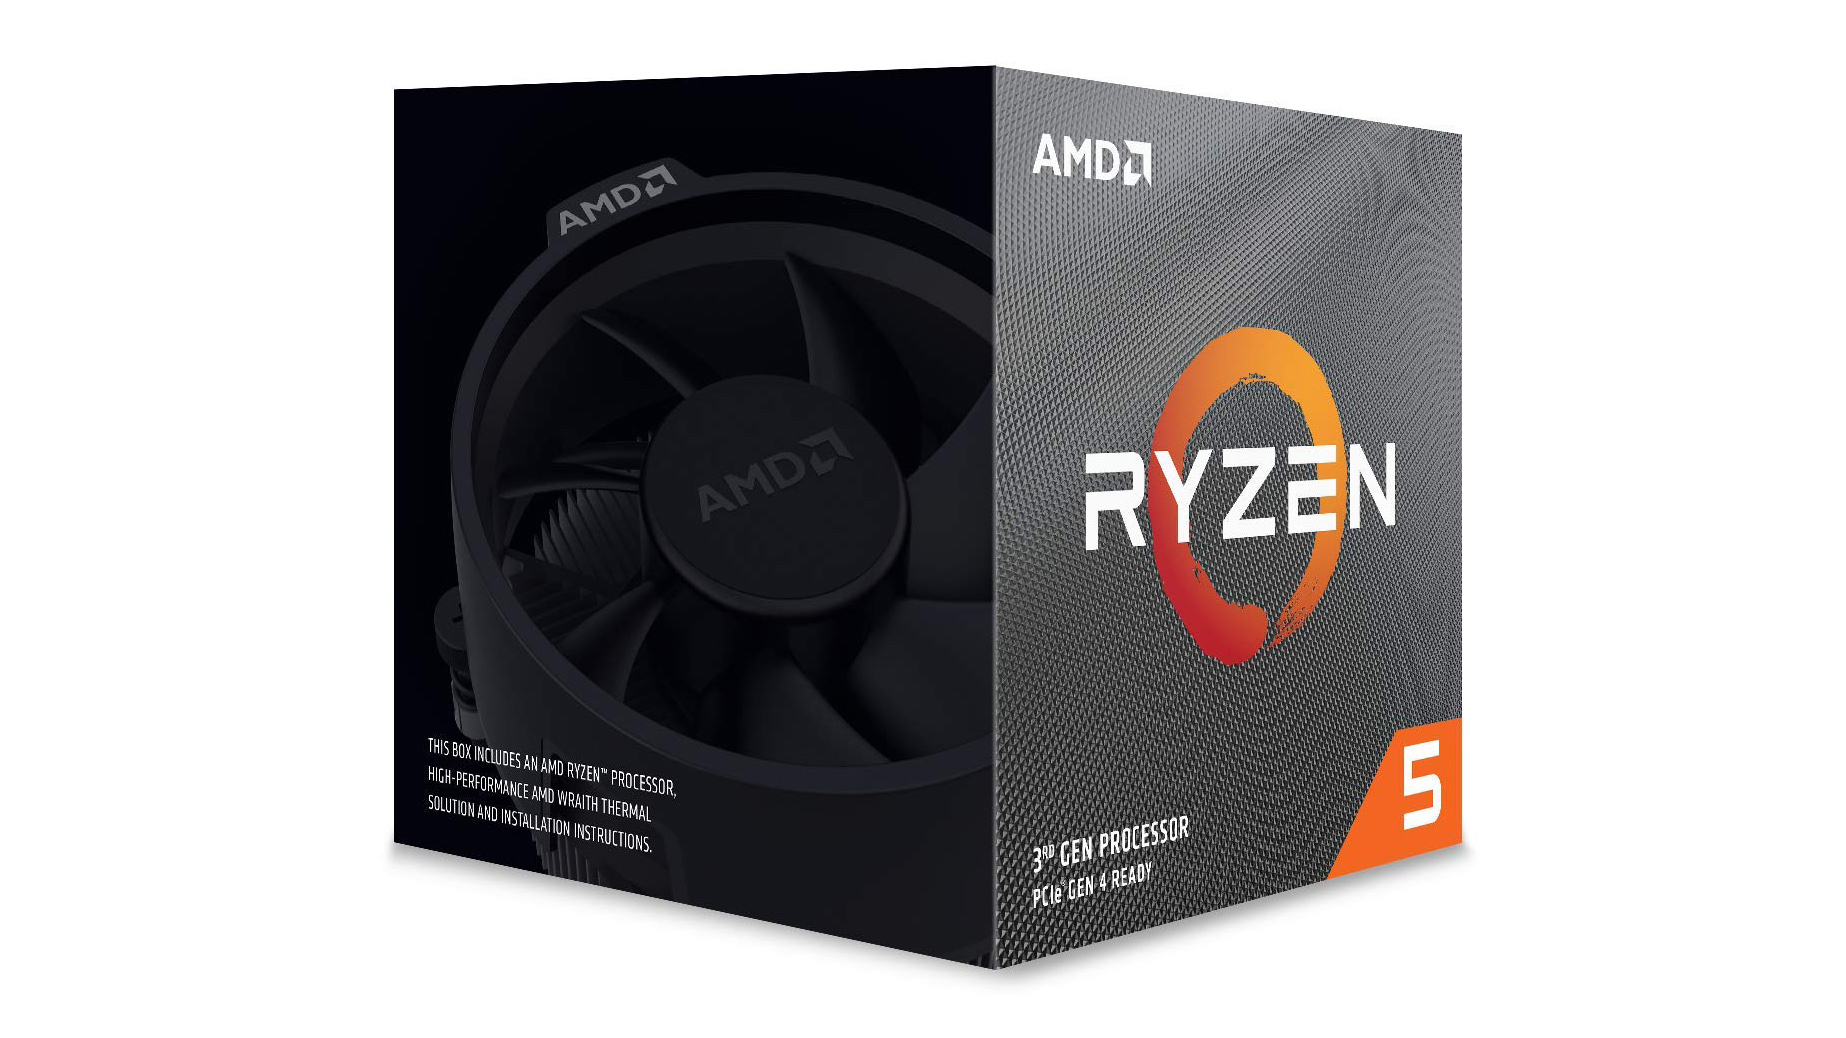 Ulasan AMD Ryzen 5 3600X: CPU Ryzen terbaik untuk bermain game